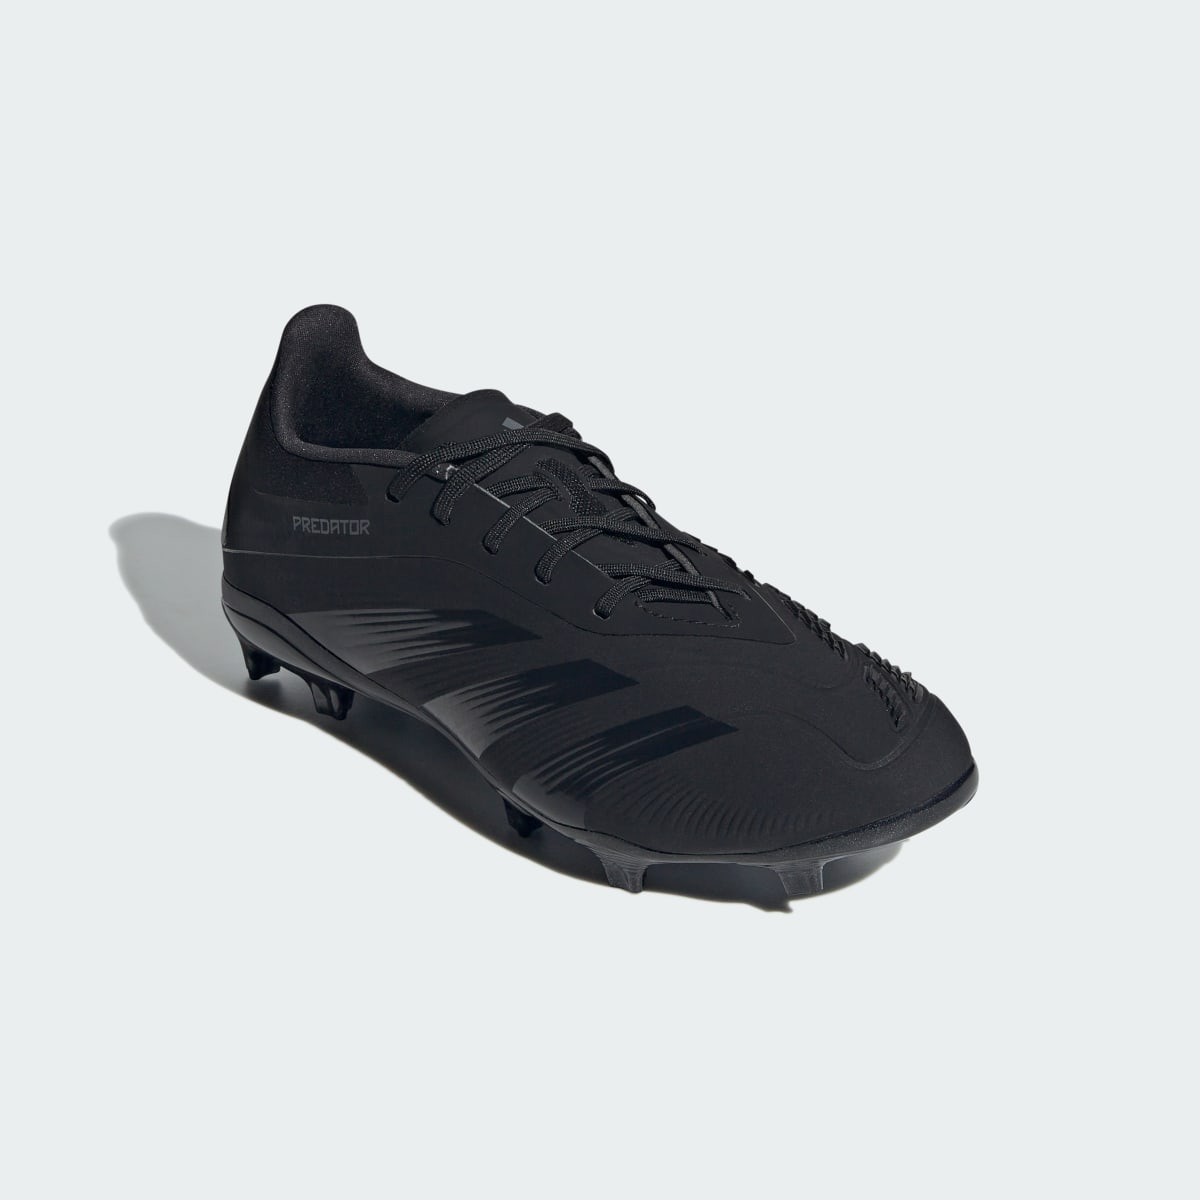 Adidas Predator Elite Firm Ground Football Boots. 5